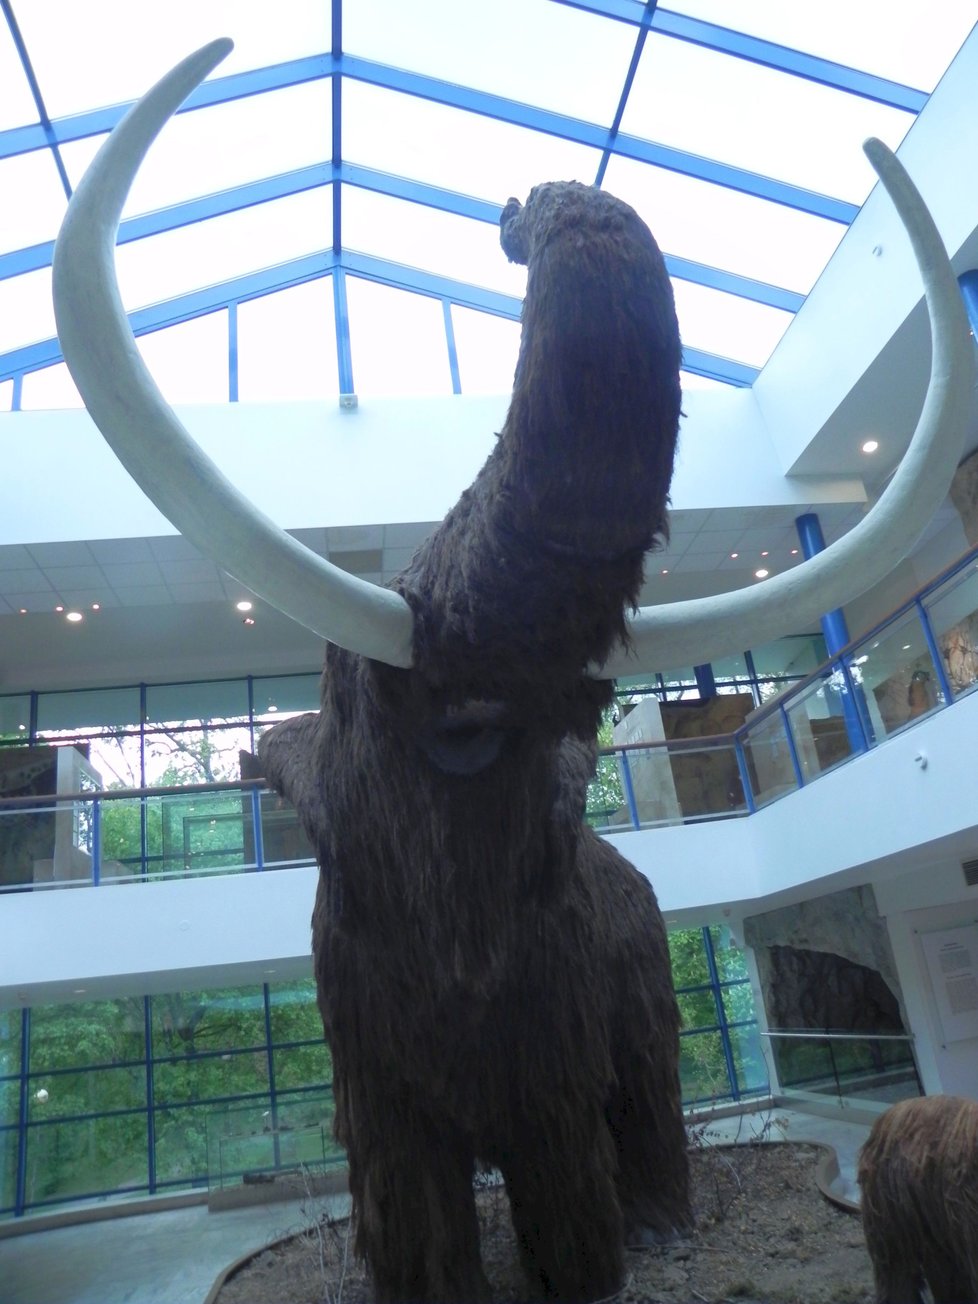 Fenomén brněnského mamuta trvá už 90 let.